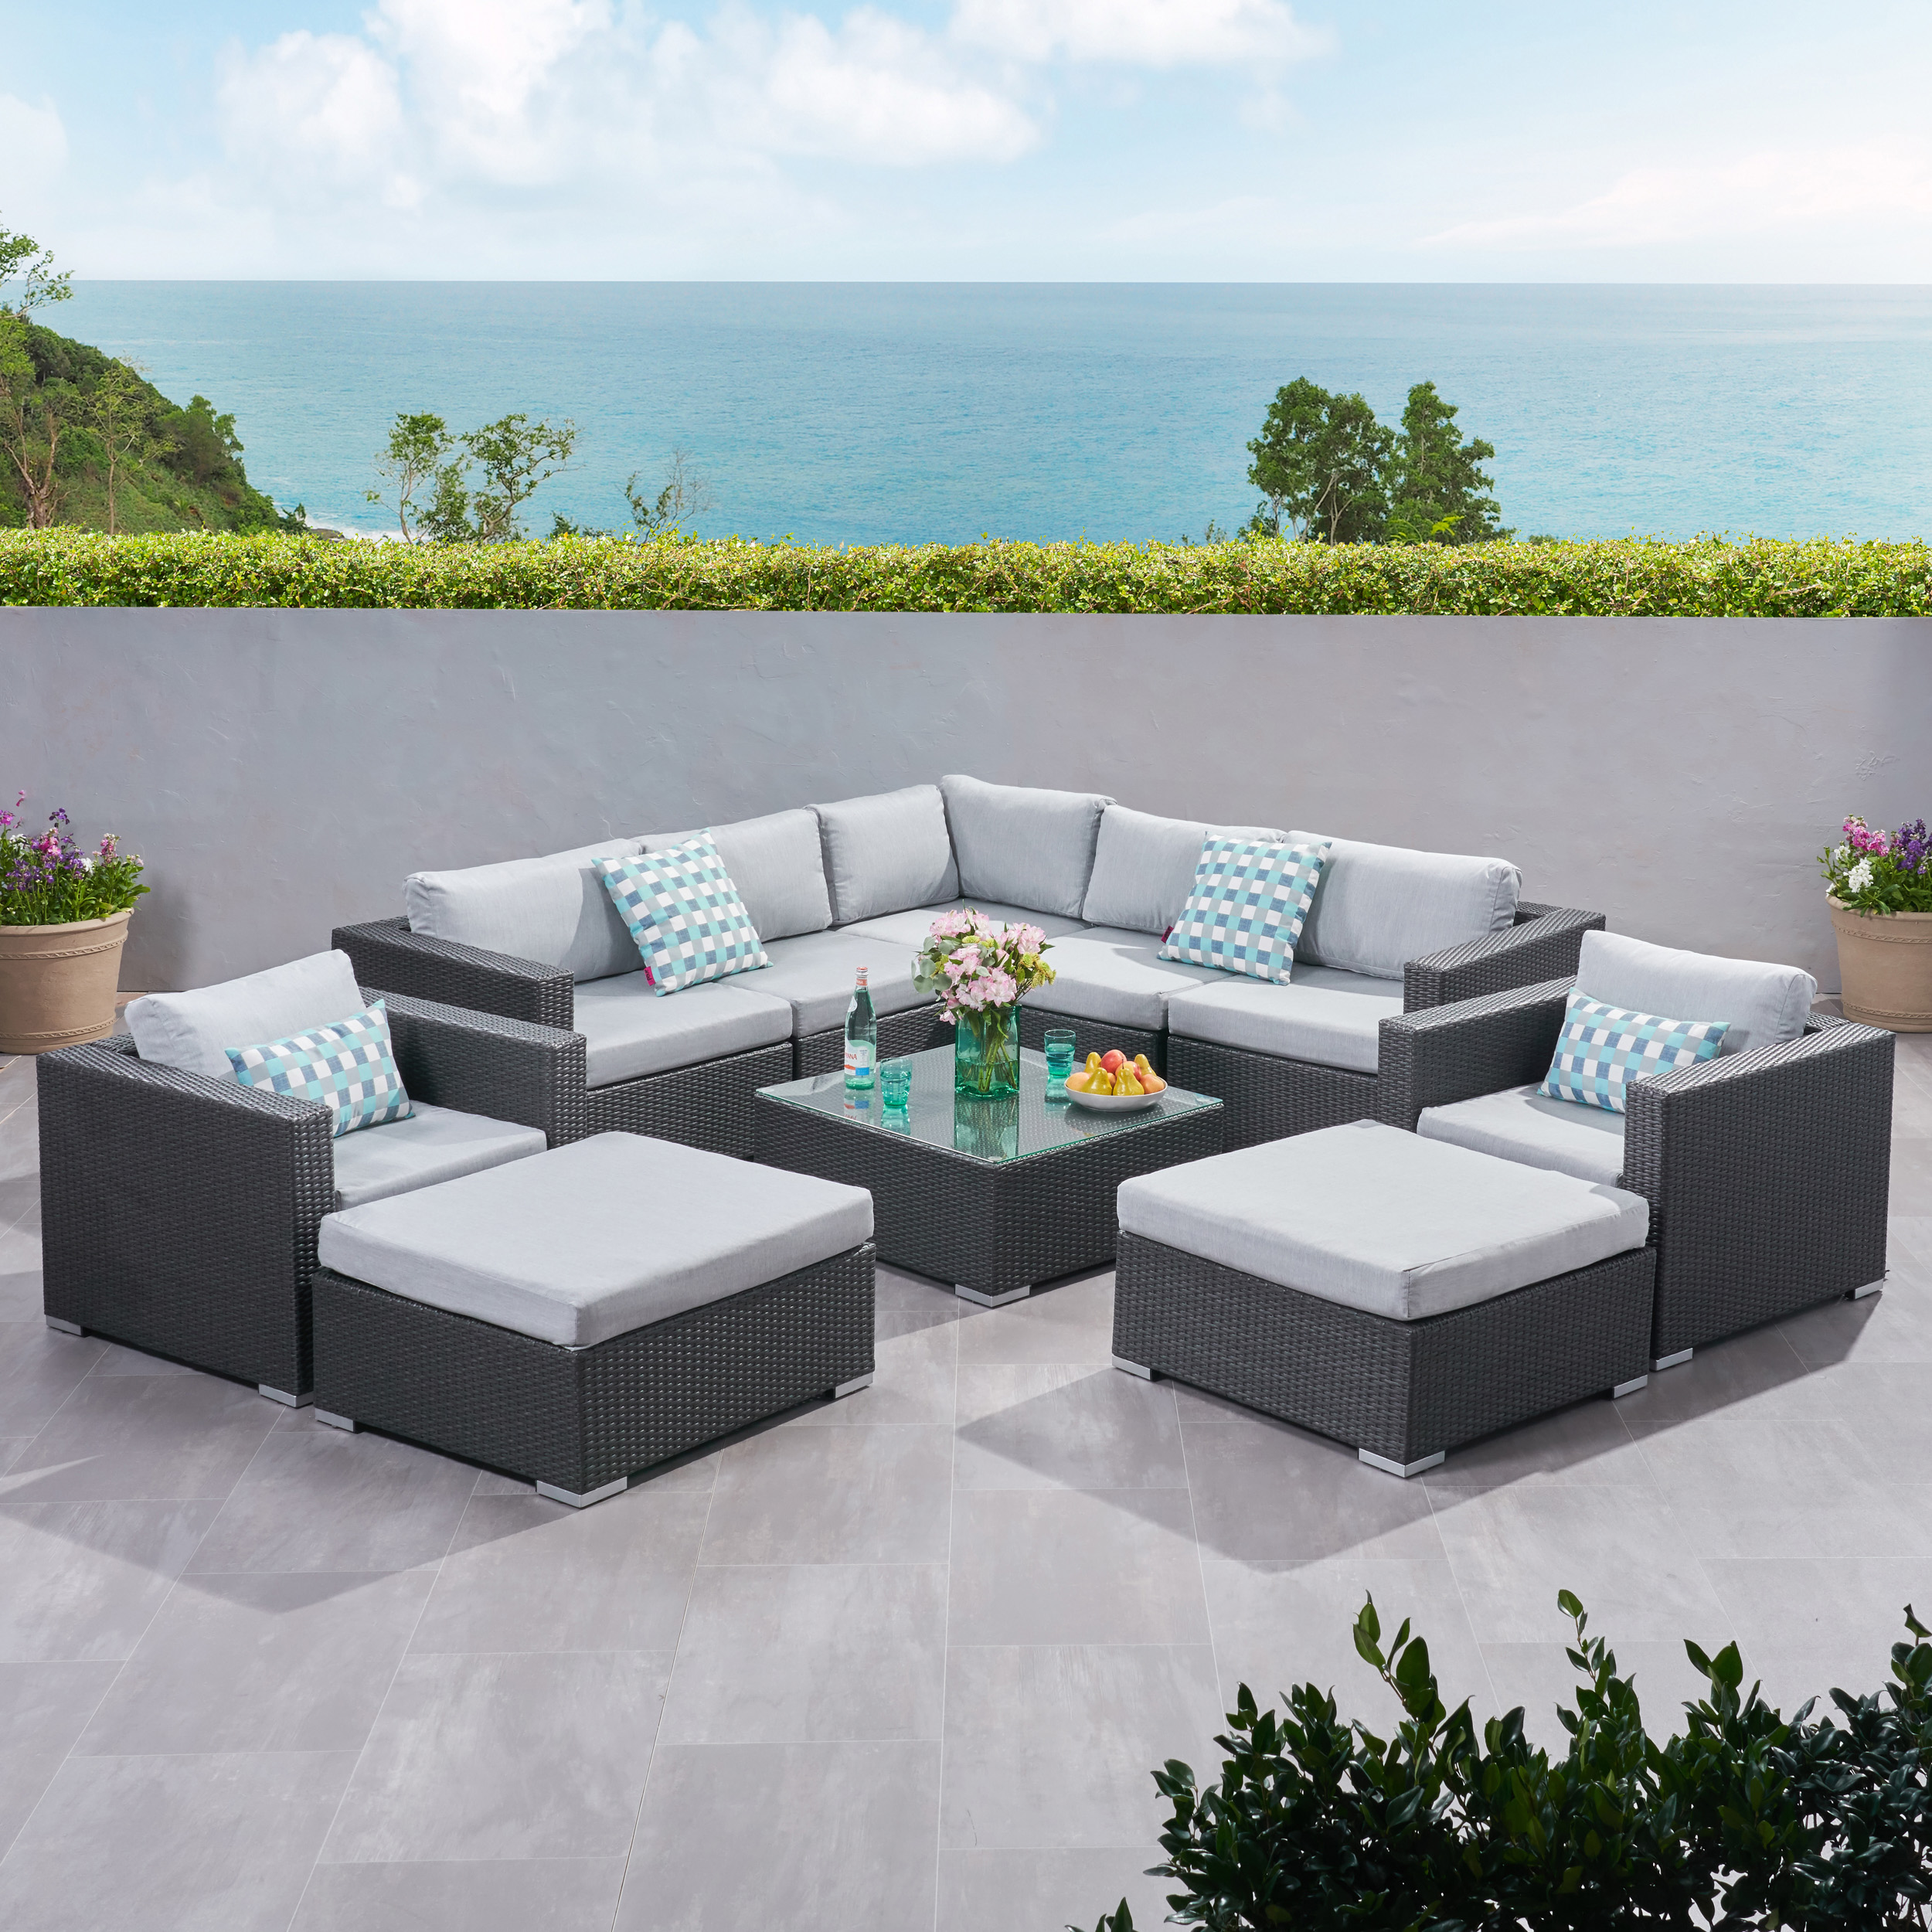 Faviola Outdoor 7 Seater Wicker Sectional Sofa Set with Sunbrella Cushions, Gray and Sunbrella Canvas Granite - image 1 of 10